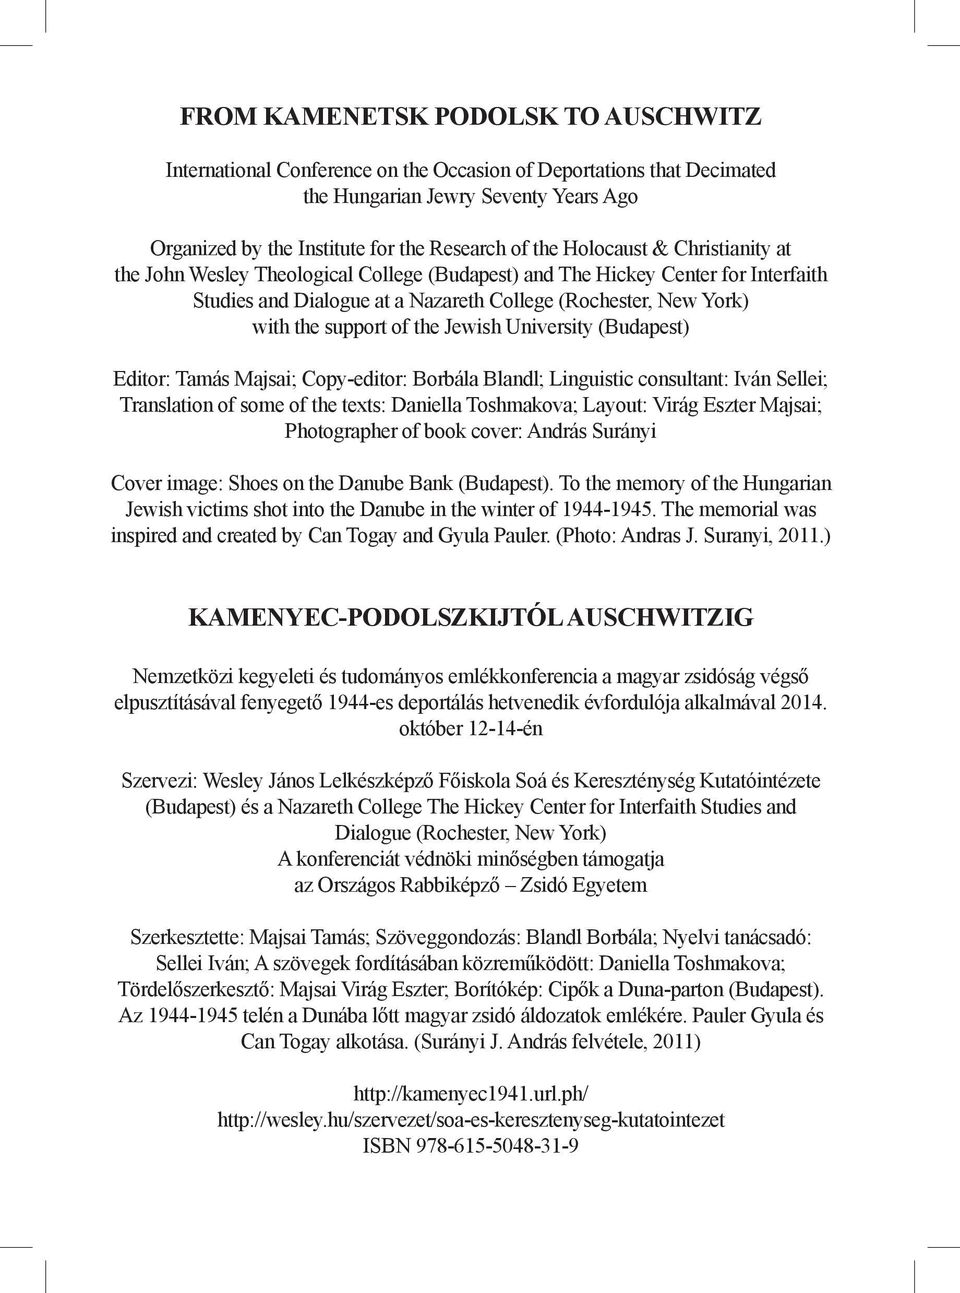 the Jewish University (Budapest) Editor: Tamás Majsai; Copy-editor: Borbála Blandl; Linguistic consultant: Iván Sellei; Translation of some of the texts: Daniella Toshmakova; Layout: Virág Eszter